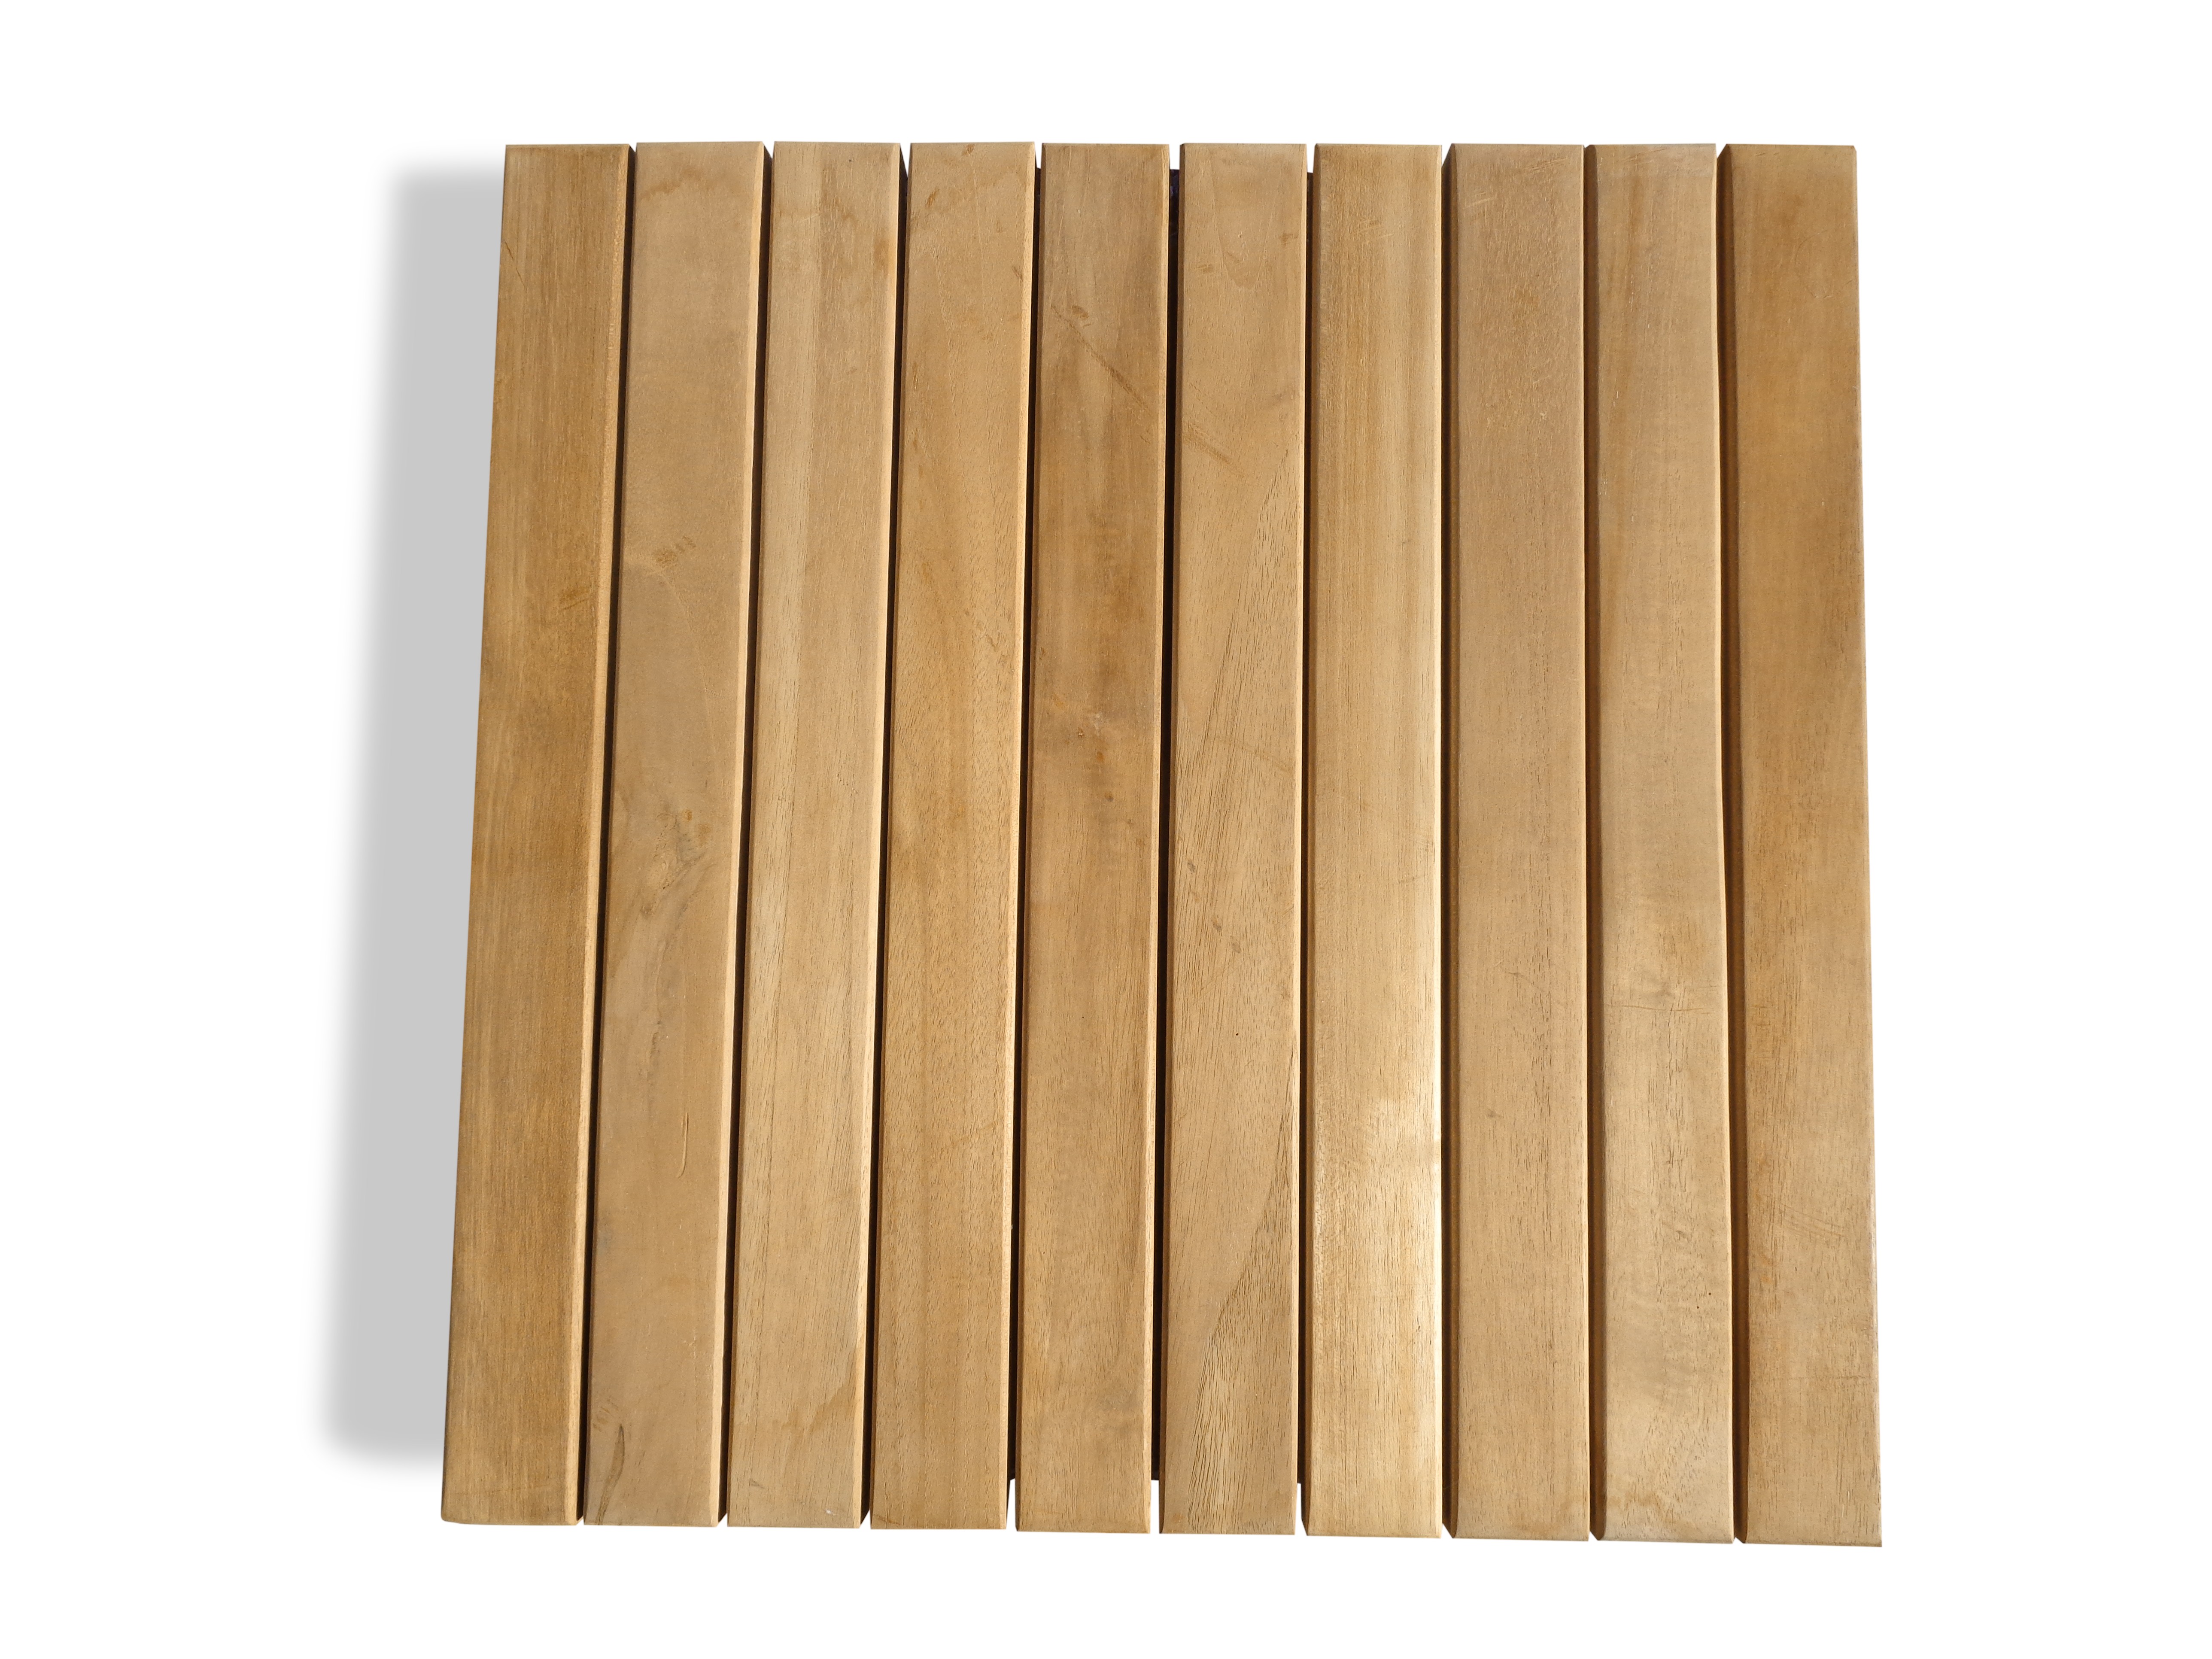 Pack of 5 Teak Floor Tiles Indoor/Outdoors.. 19.75" Square ..11 lbs ea...Perfect for Decks, Saunas, Showers, Yards, etc 